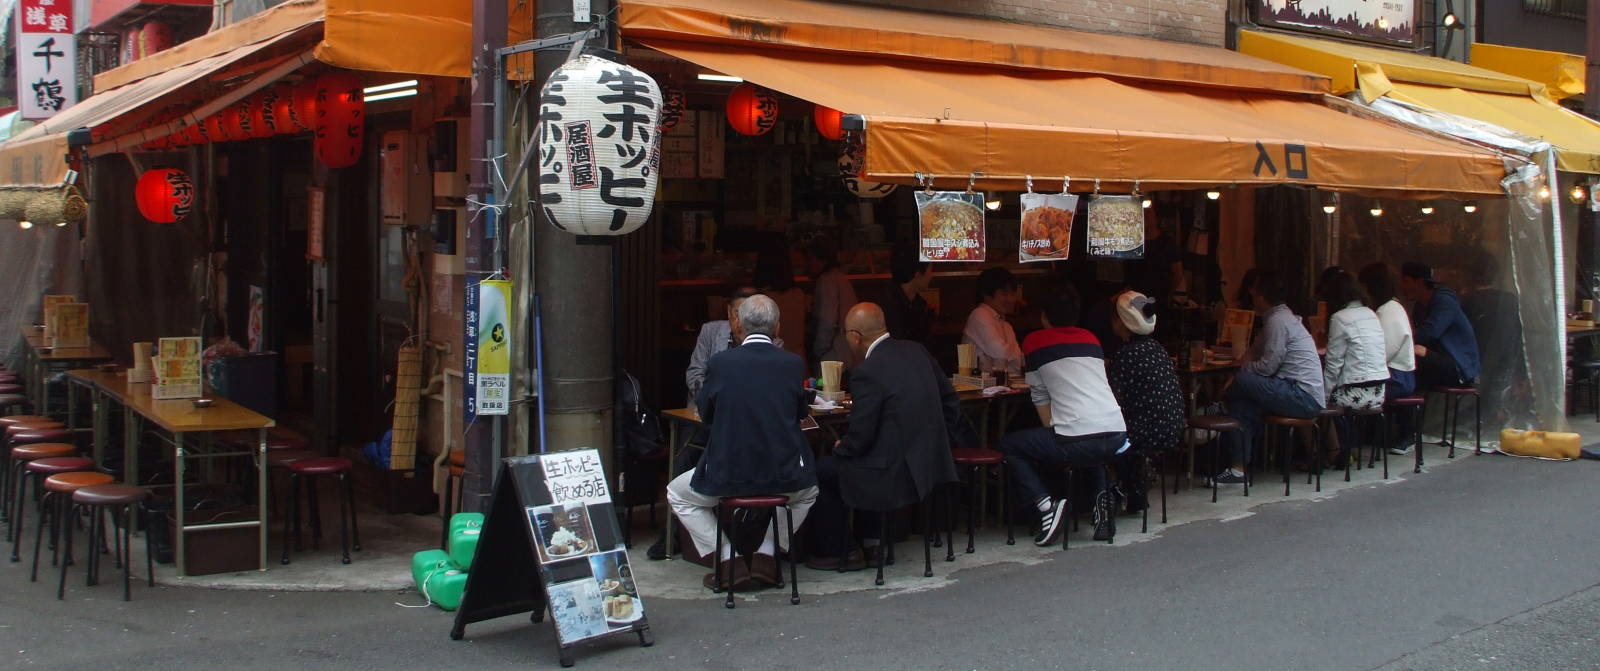 People eating yakitori in an izakaya on Hoppy Street near Sensō-ji, a major Buddhist temple at Asakusa, Tōkyō